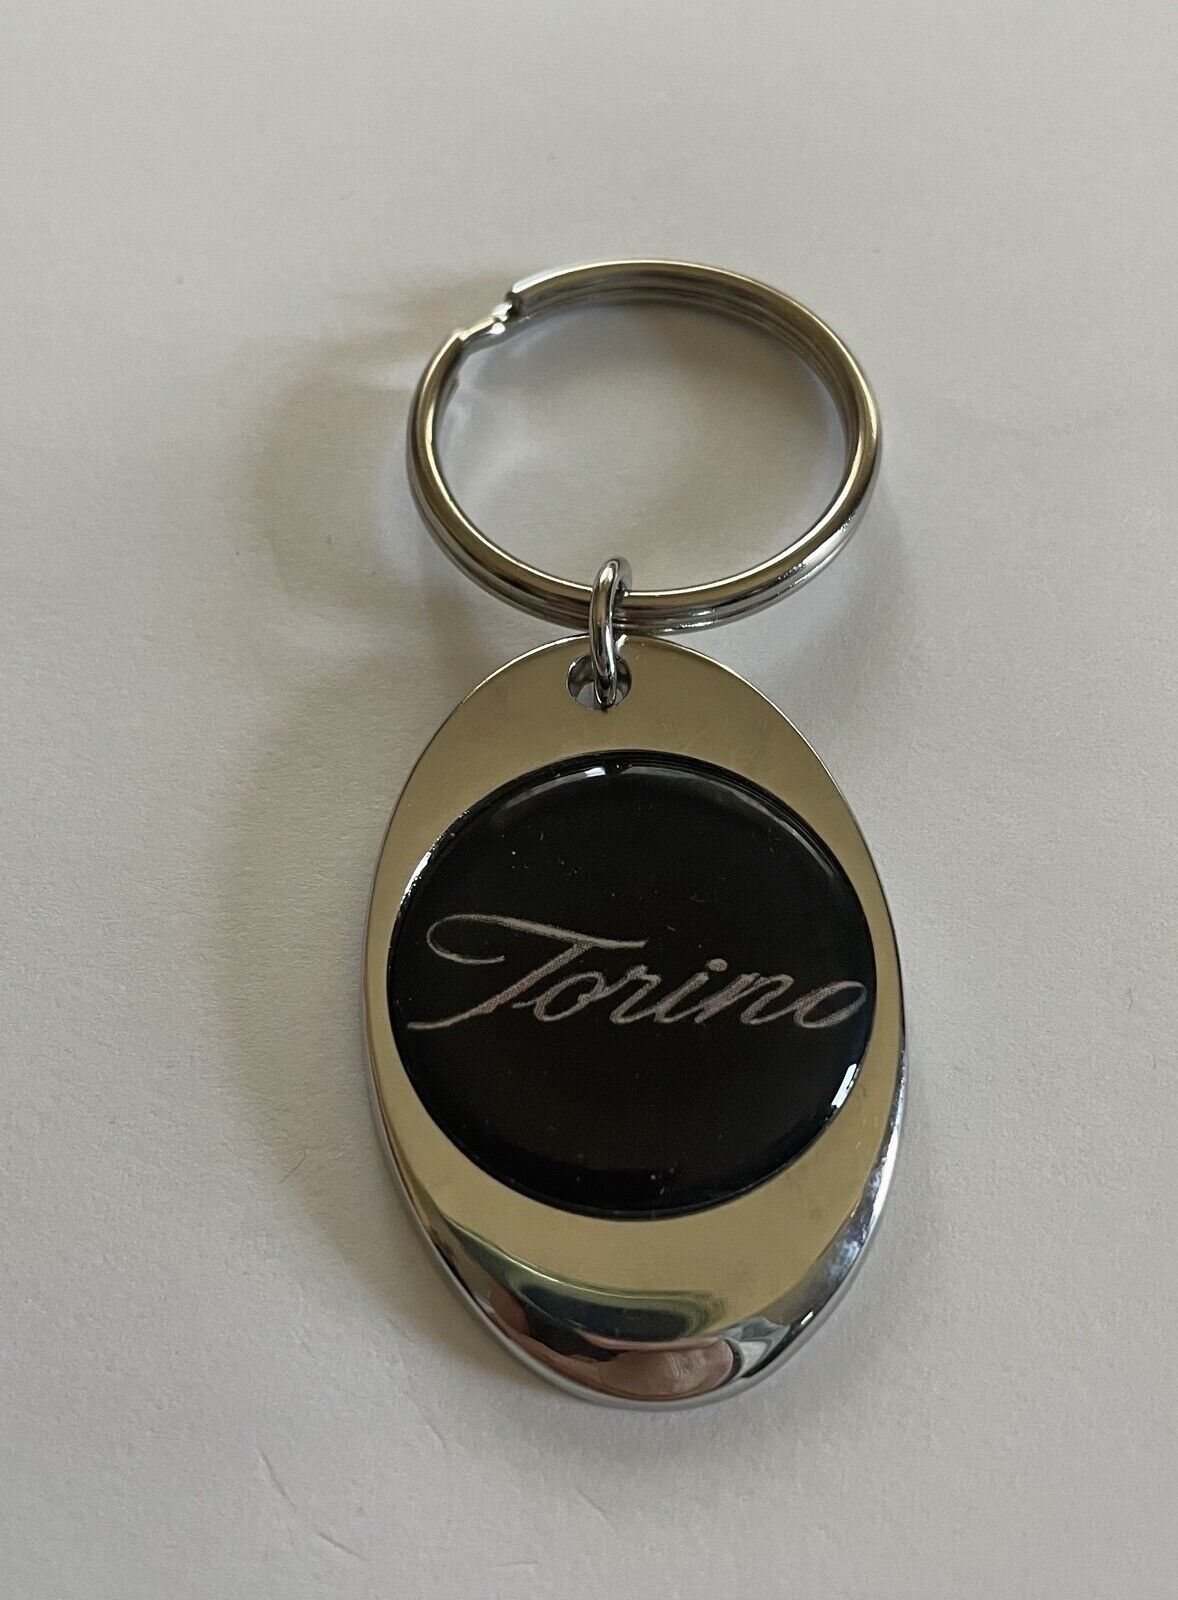 Ford Torino Keychain Lightweight Metal Chrome Style Finish Ford Key Chain Black